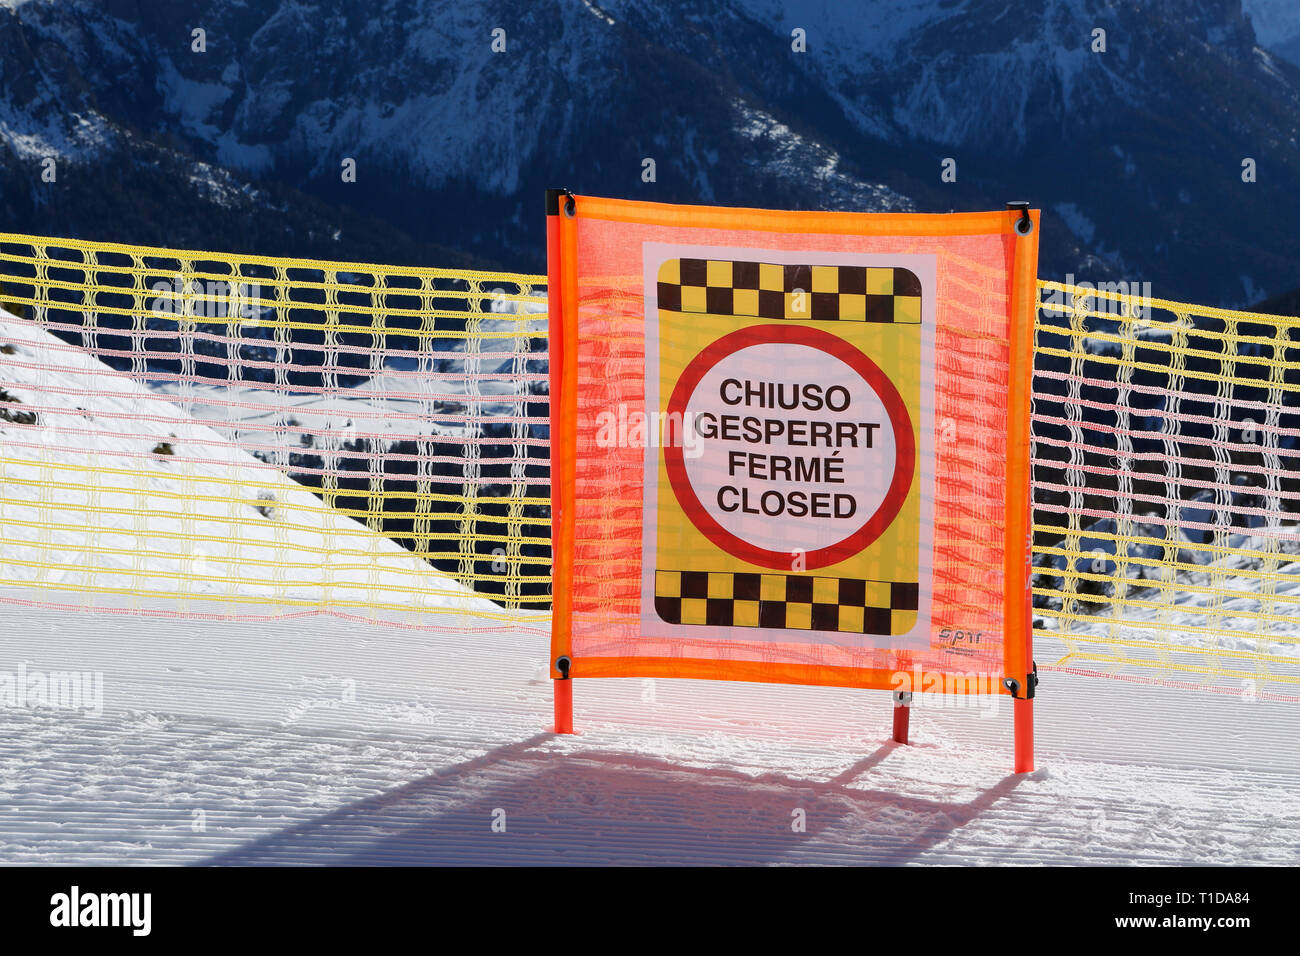 Warning of a closed ski slope Stock Photo